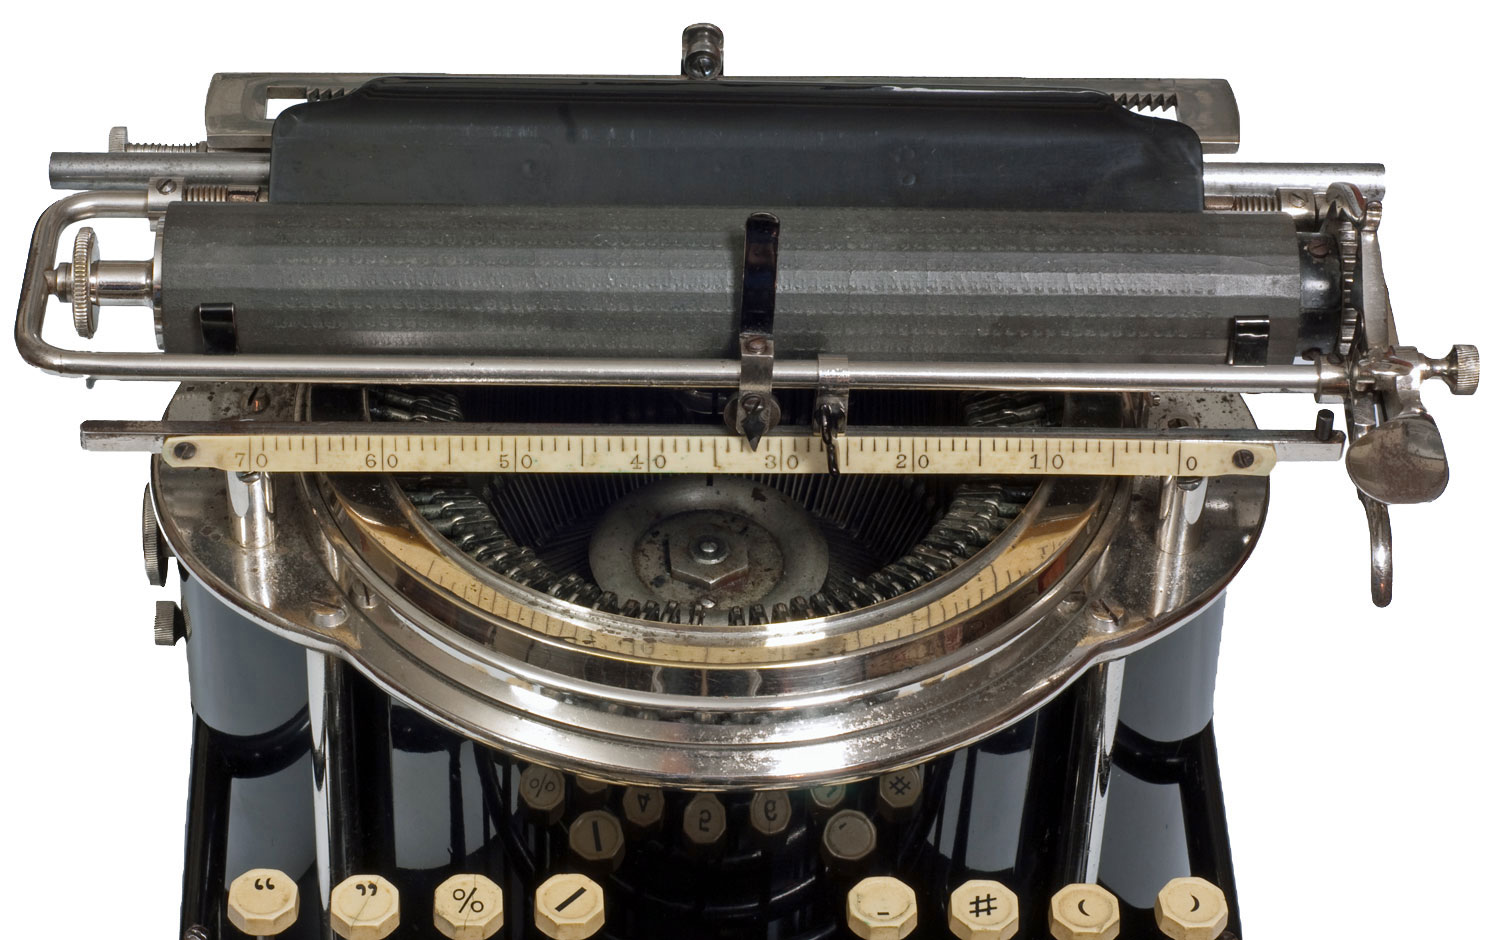 Yost Writing Machine N20, Usa, 1920s for sale at Pamono